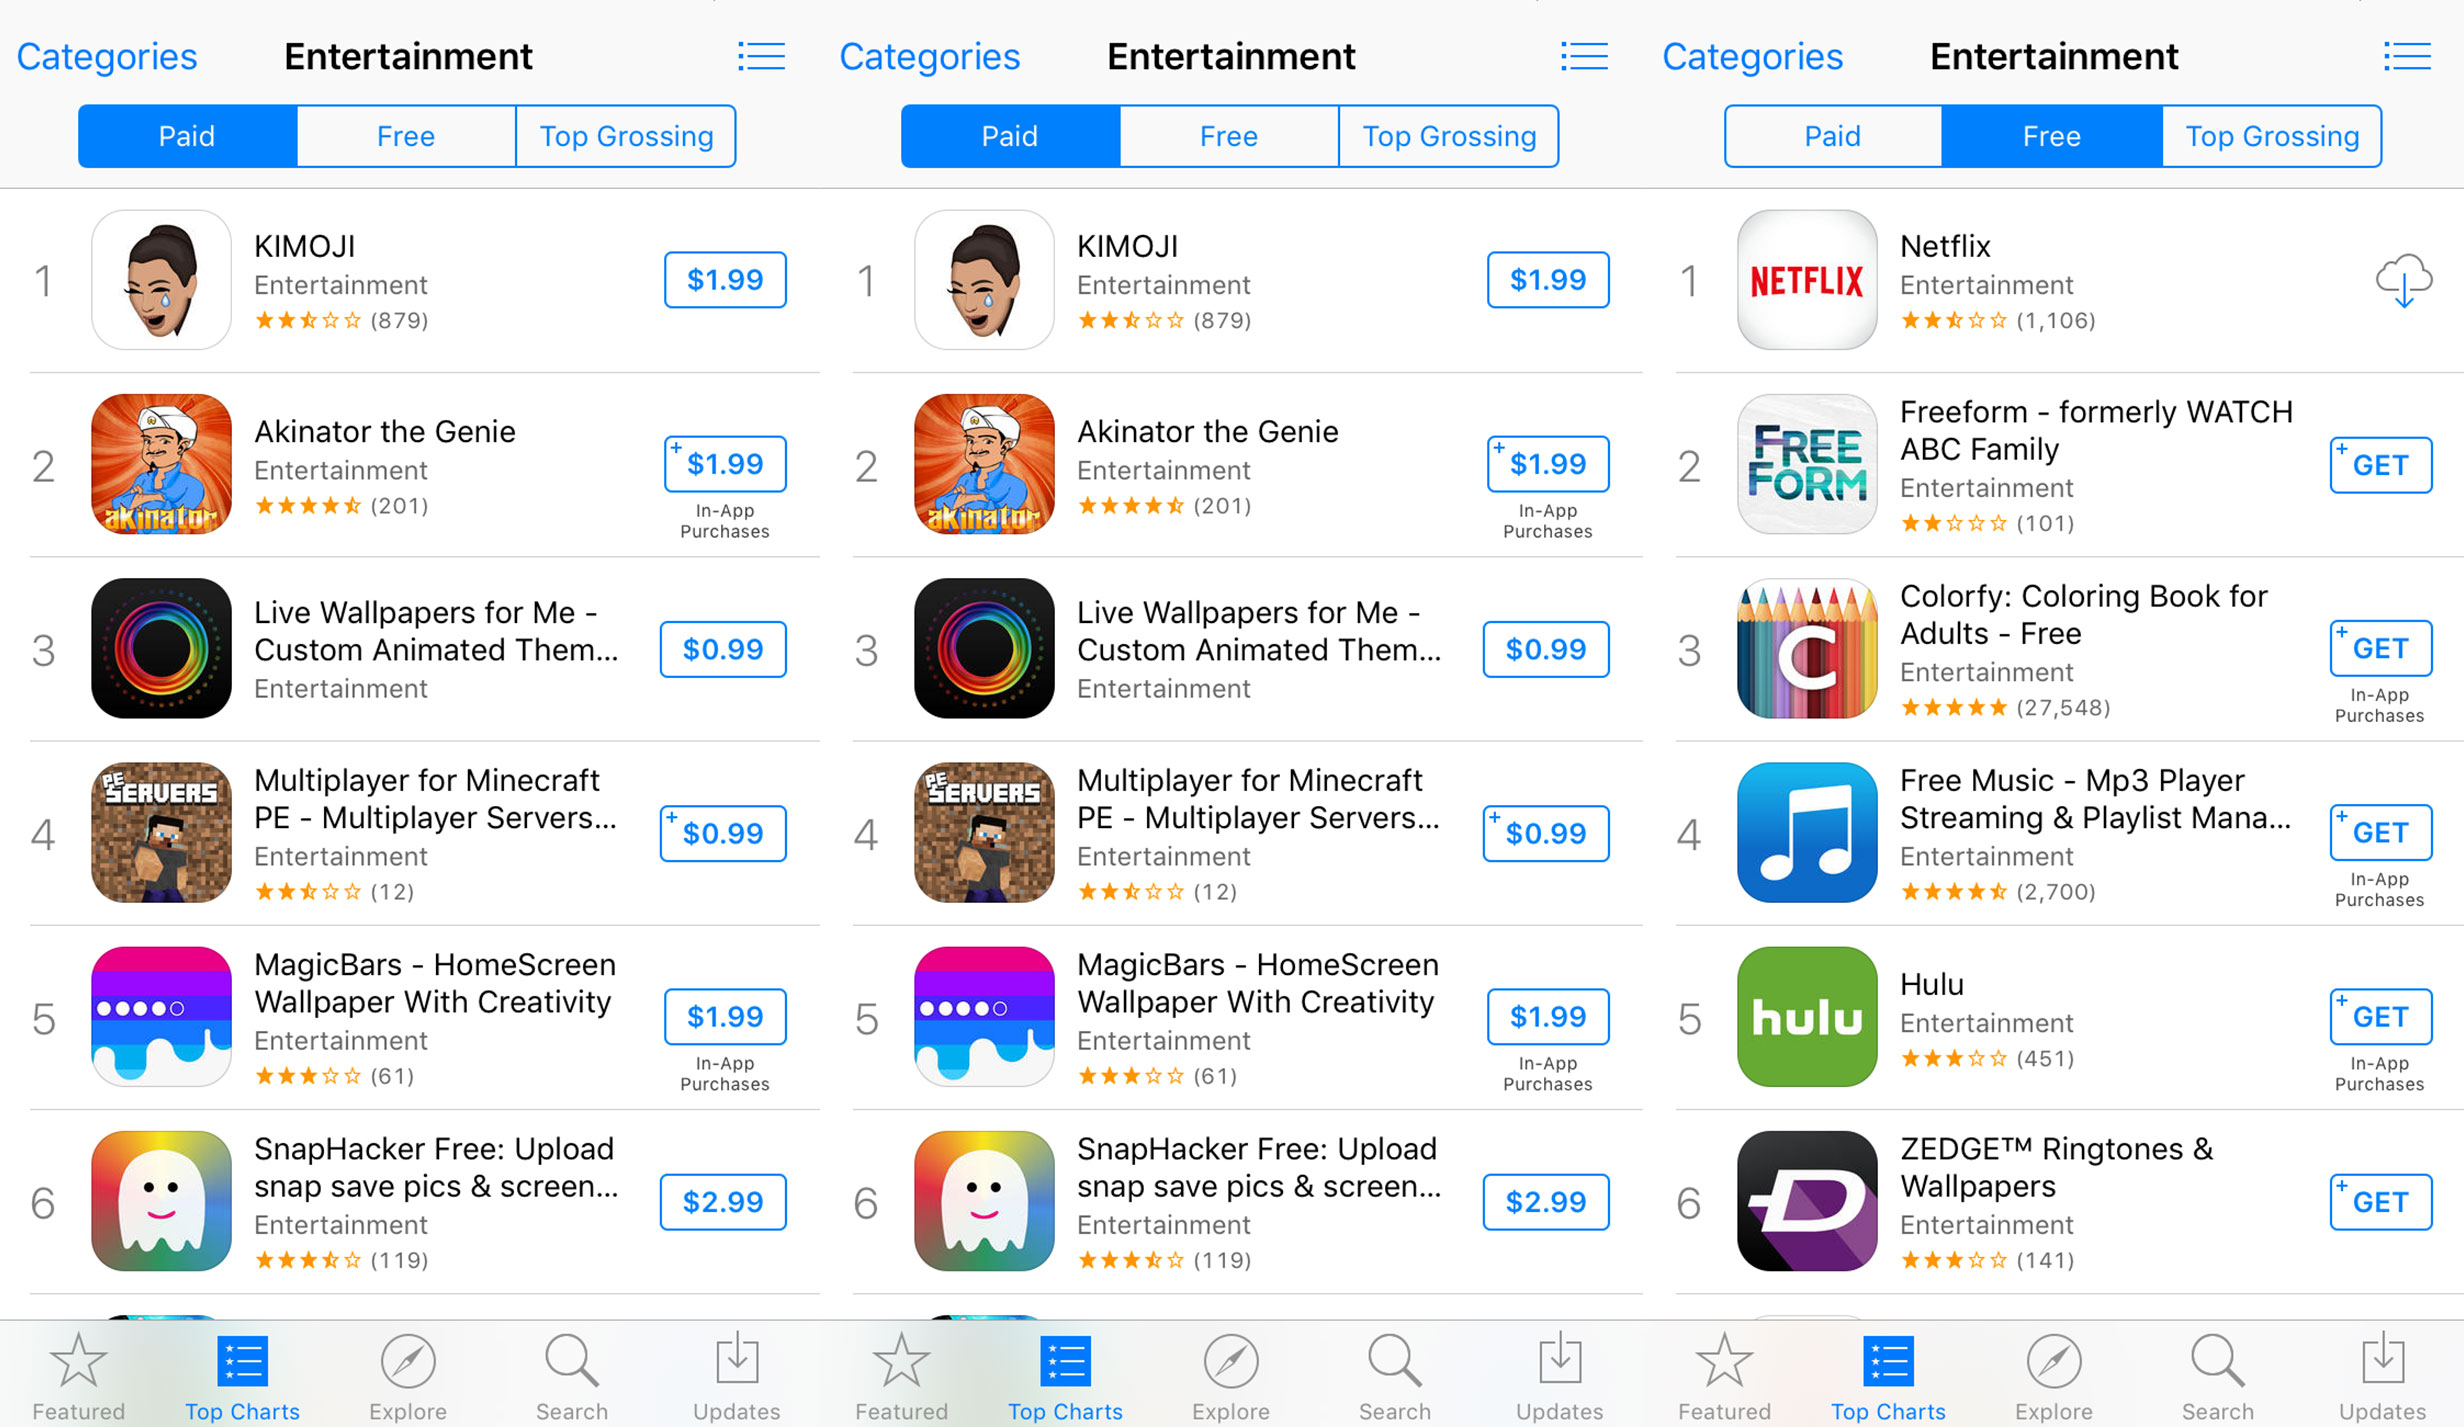 mobile app analytics on entertainment apps